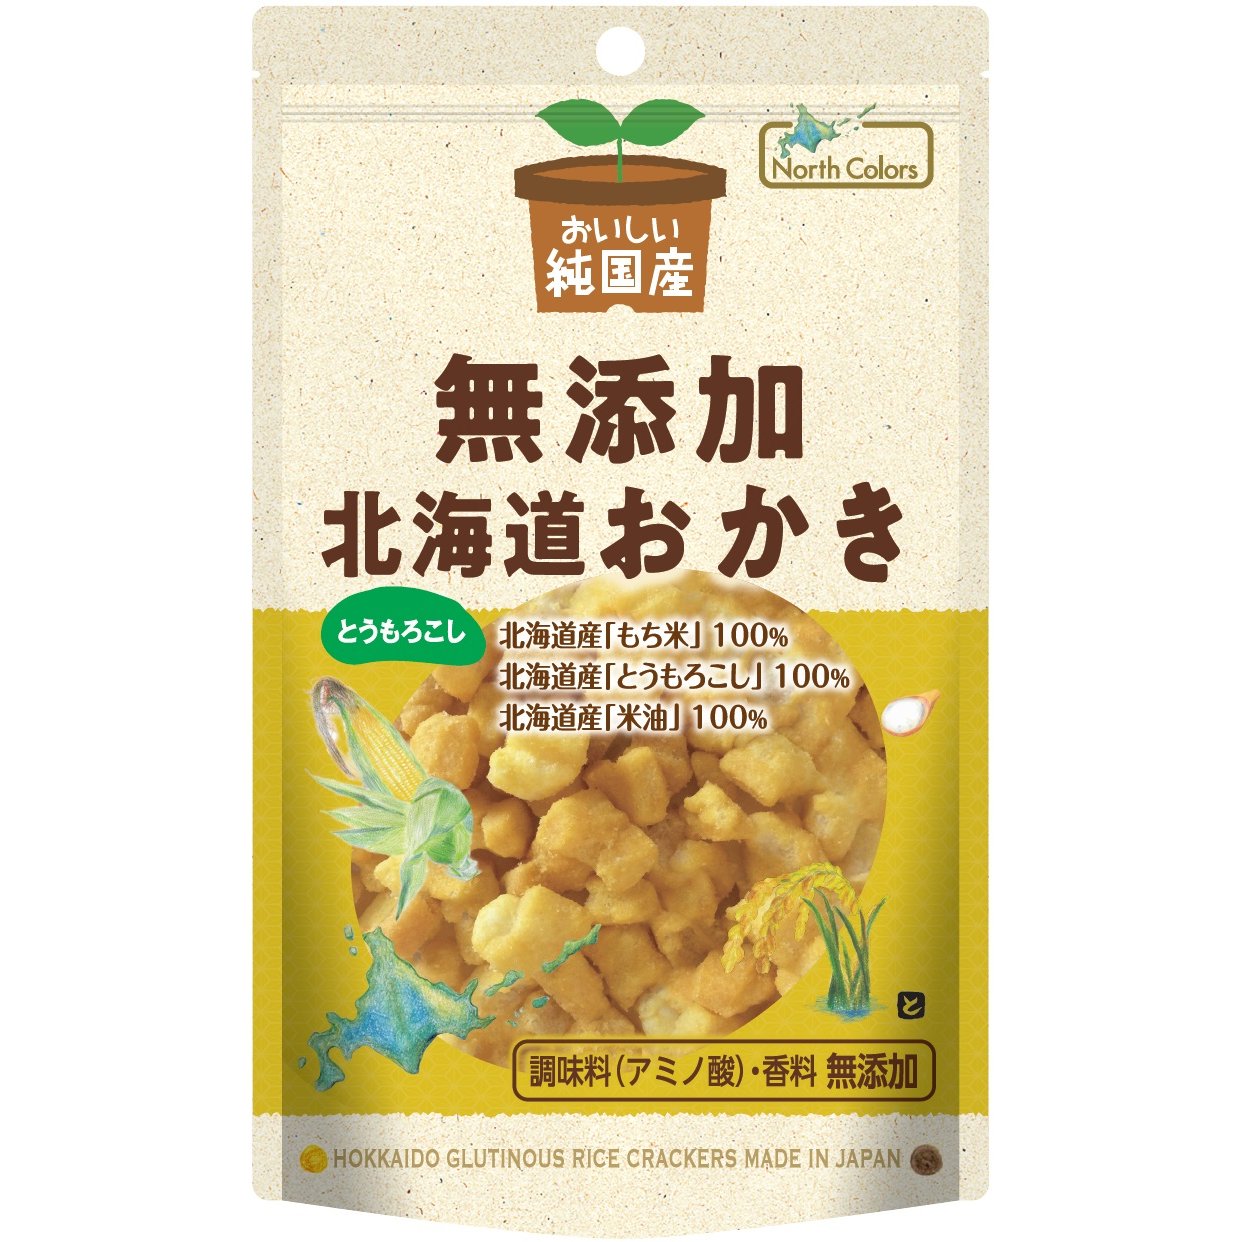 North Colors Additive-Free Hokkaido Okaki Corn Rice Crackers 46g (Pack of 3)